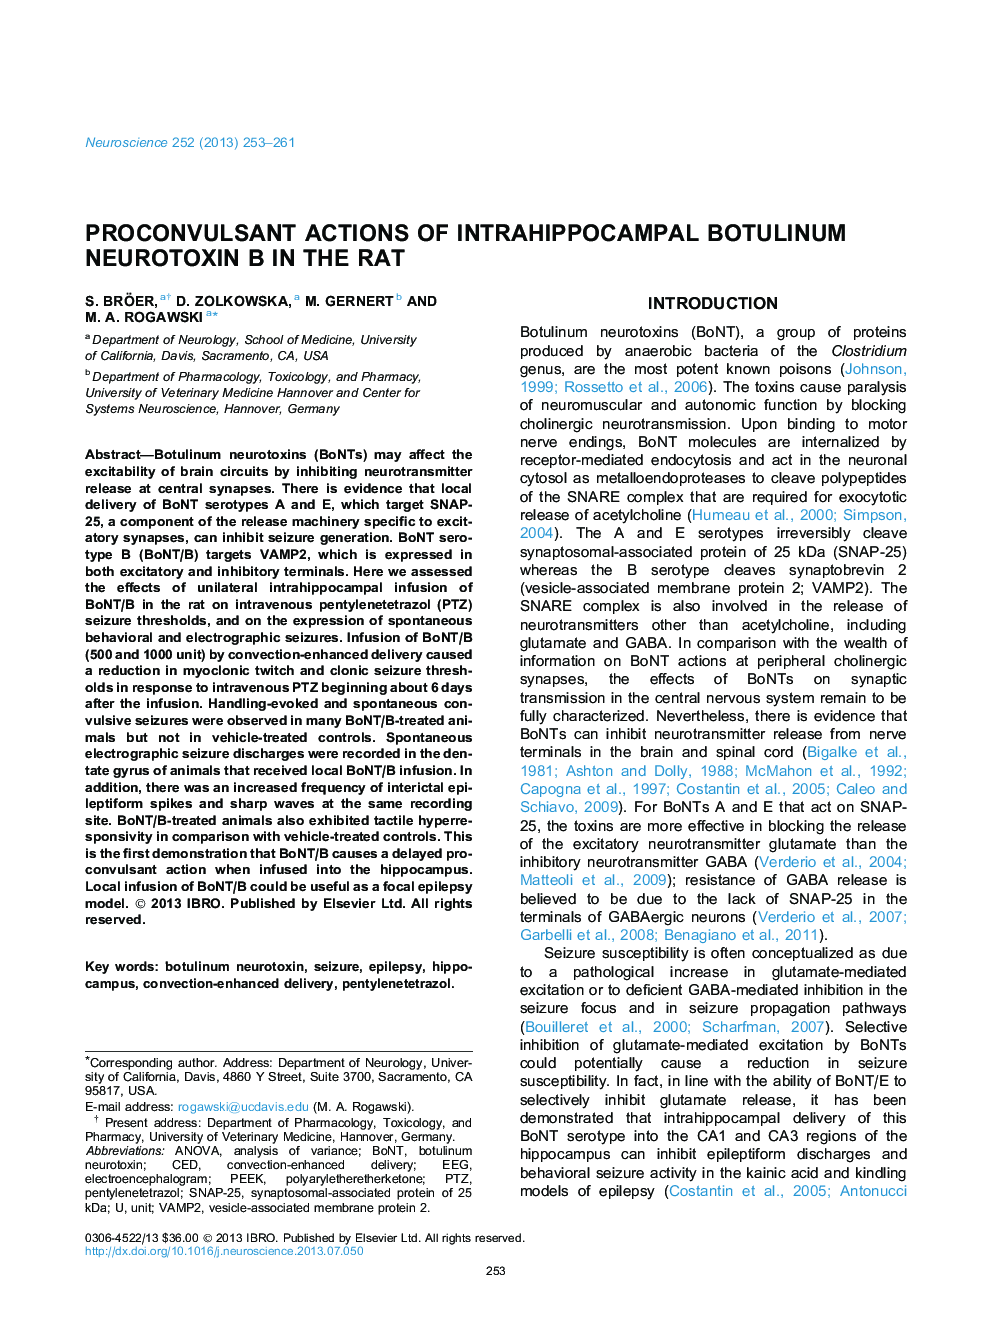 Proconvulsant actions of intrahippocampal botulinum neurotoxin B in the rat